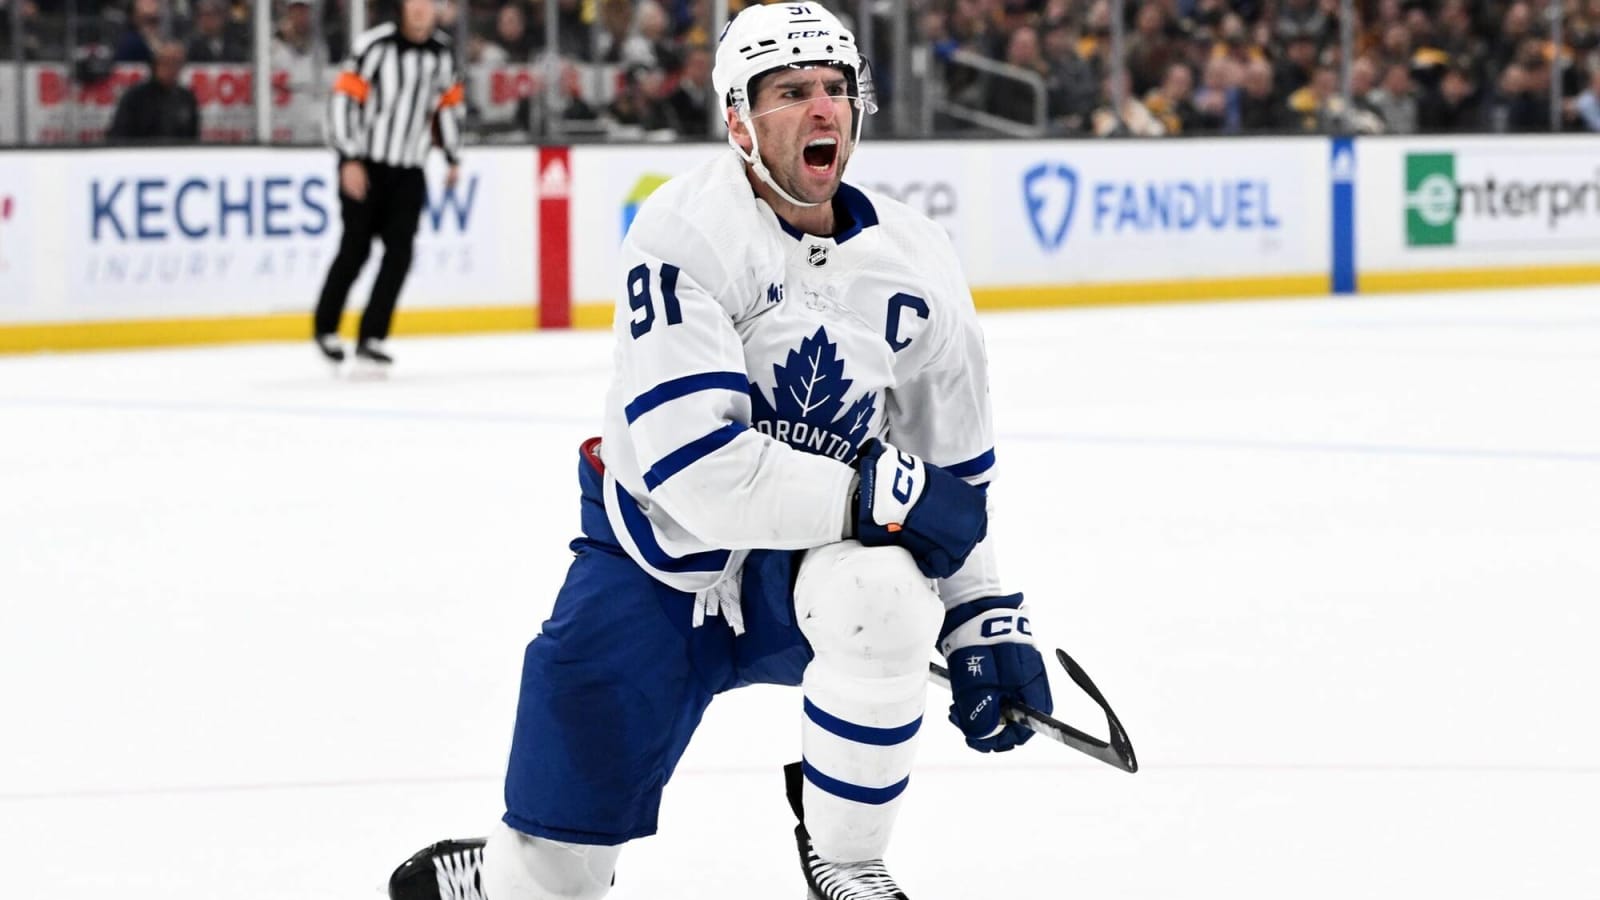 John Tavares named as Canada’s captain for IIHF World Championship